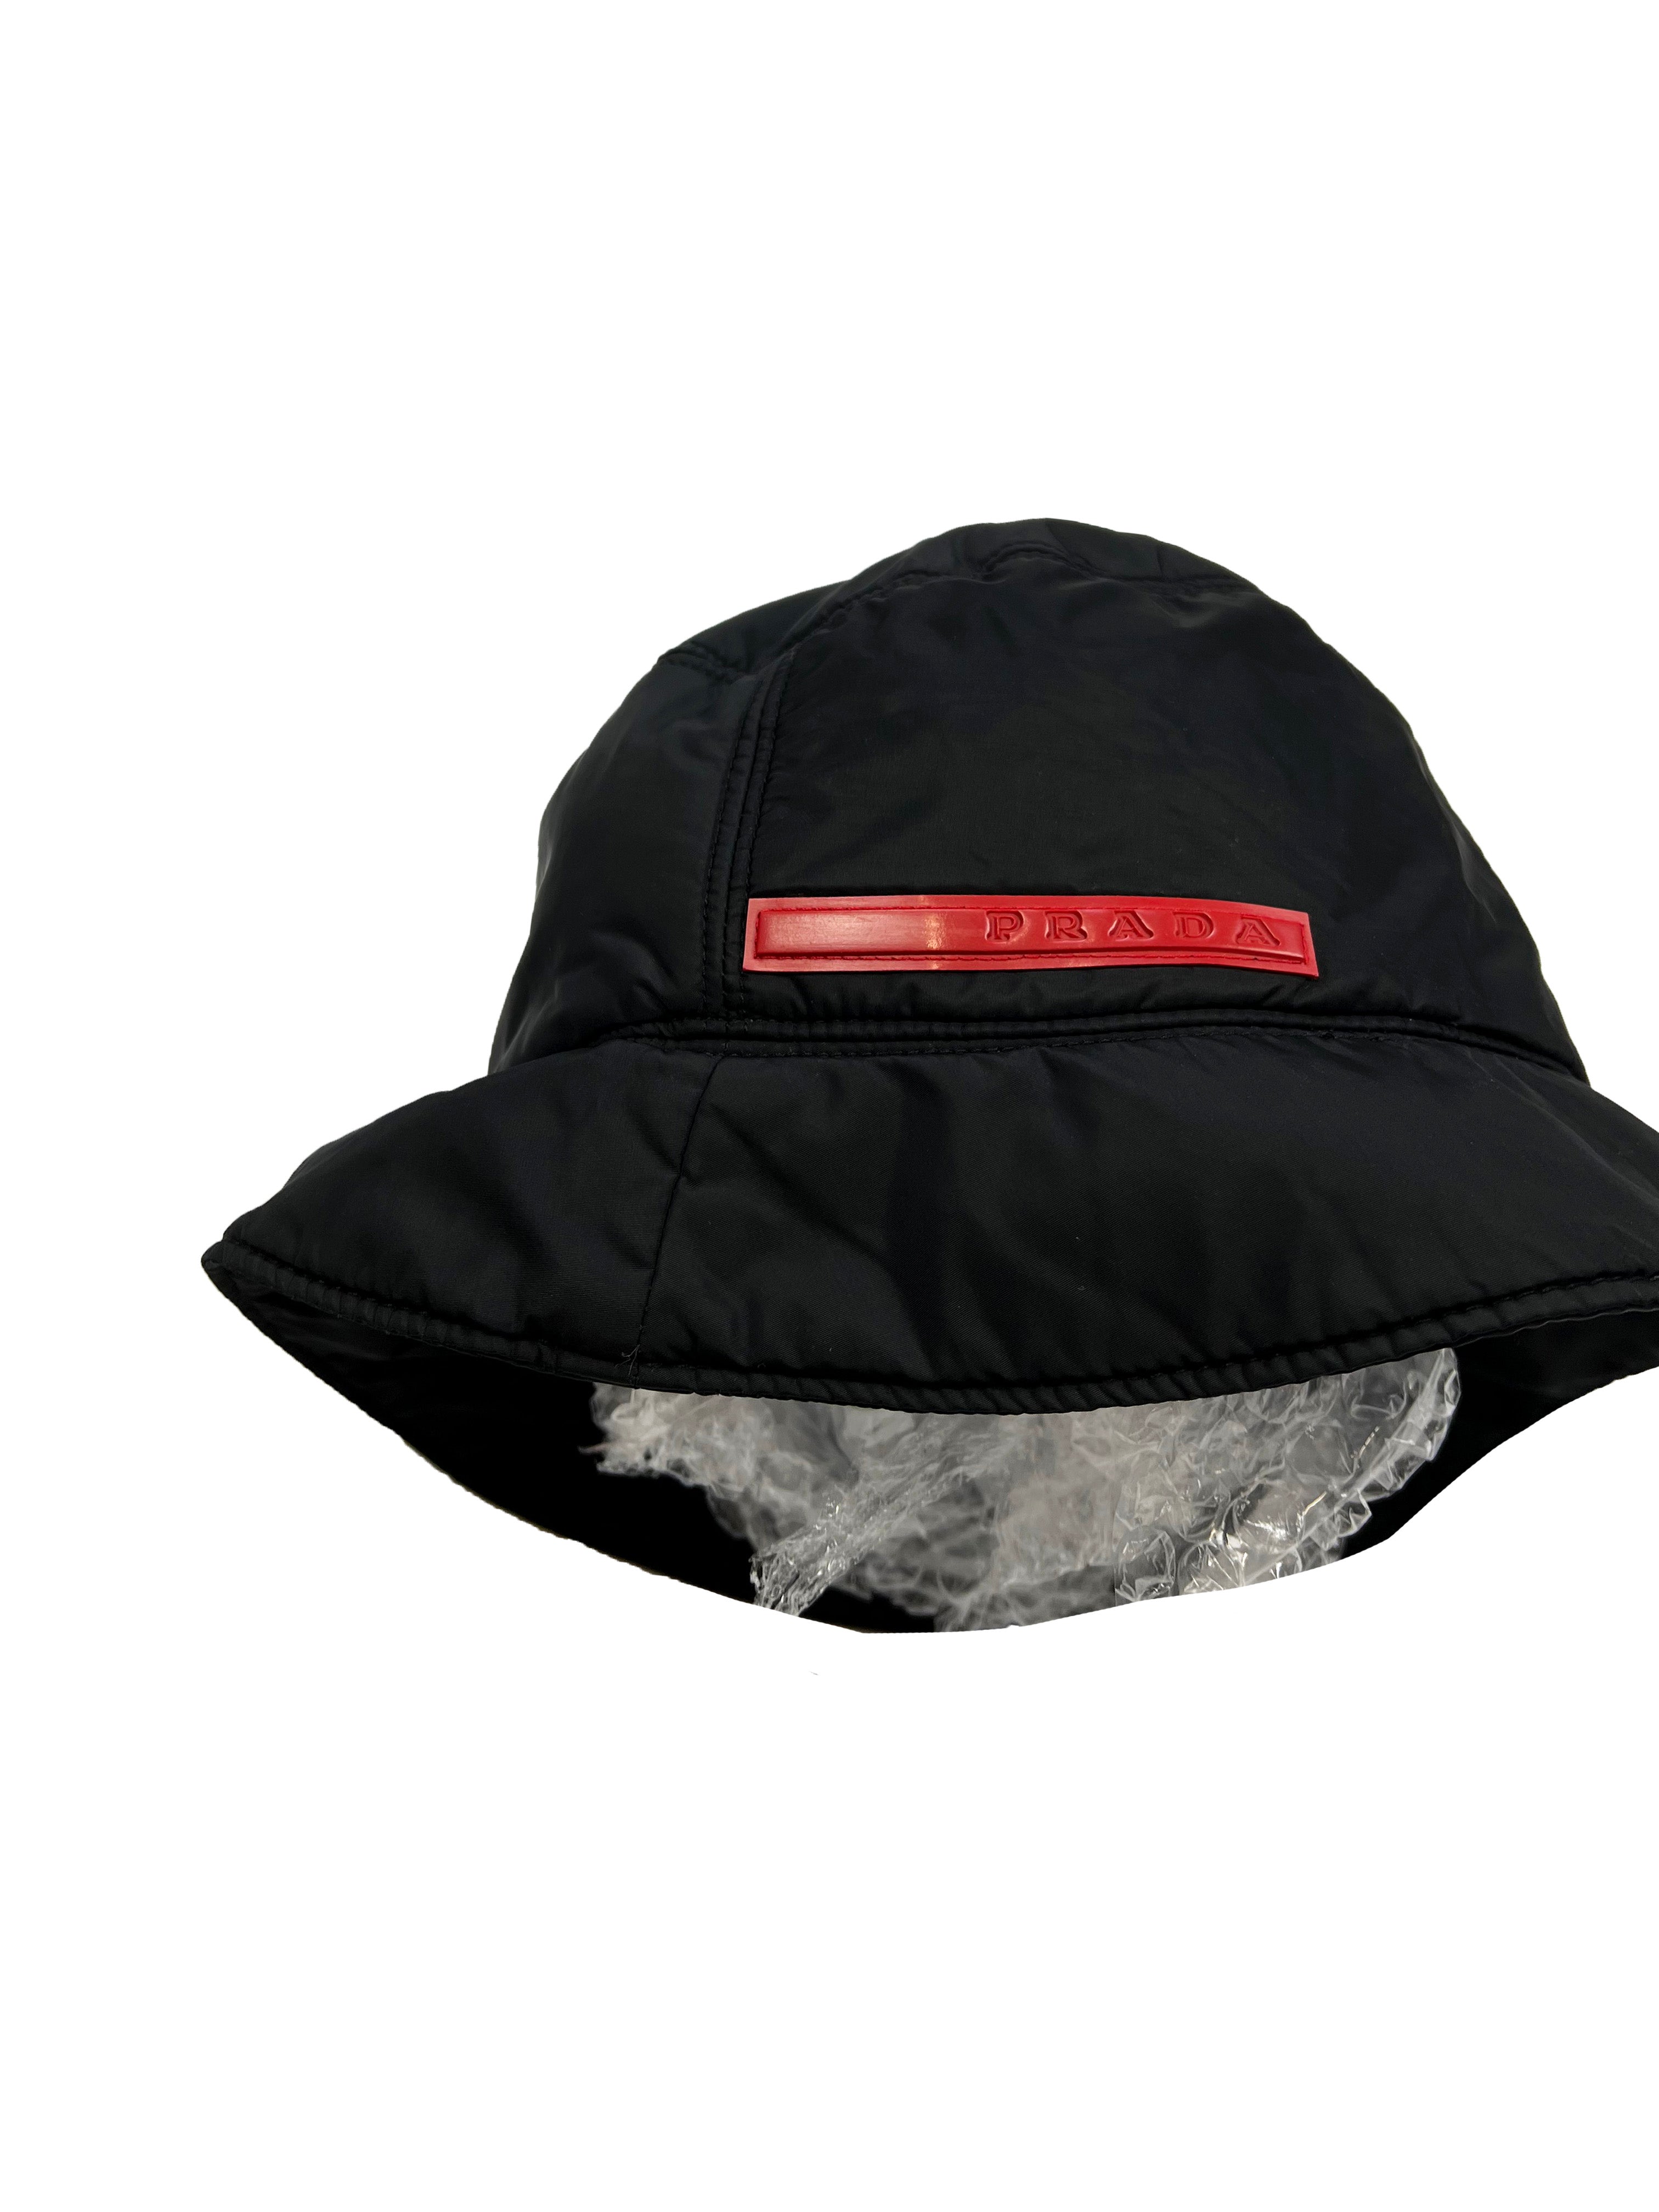 Prada Sport Red Tab Bucket Hat 00's